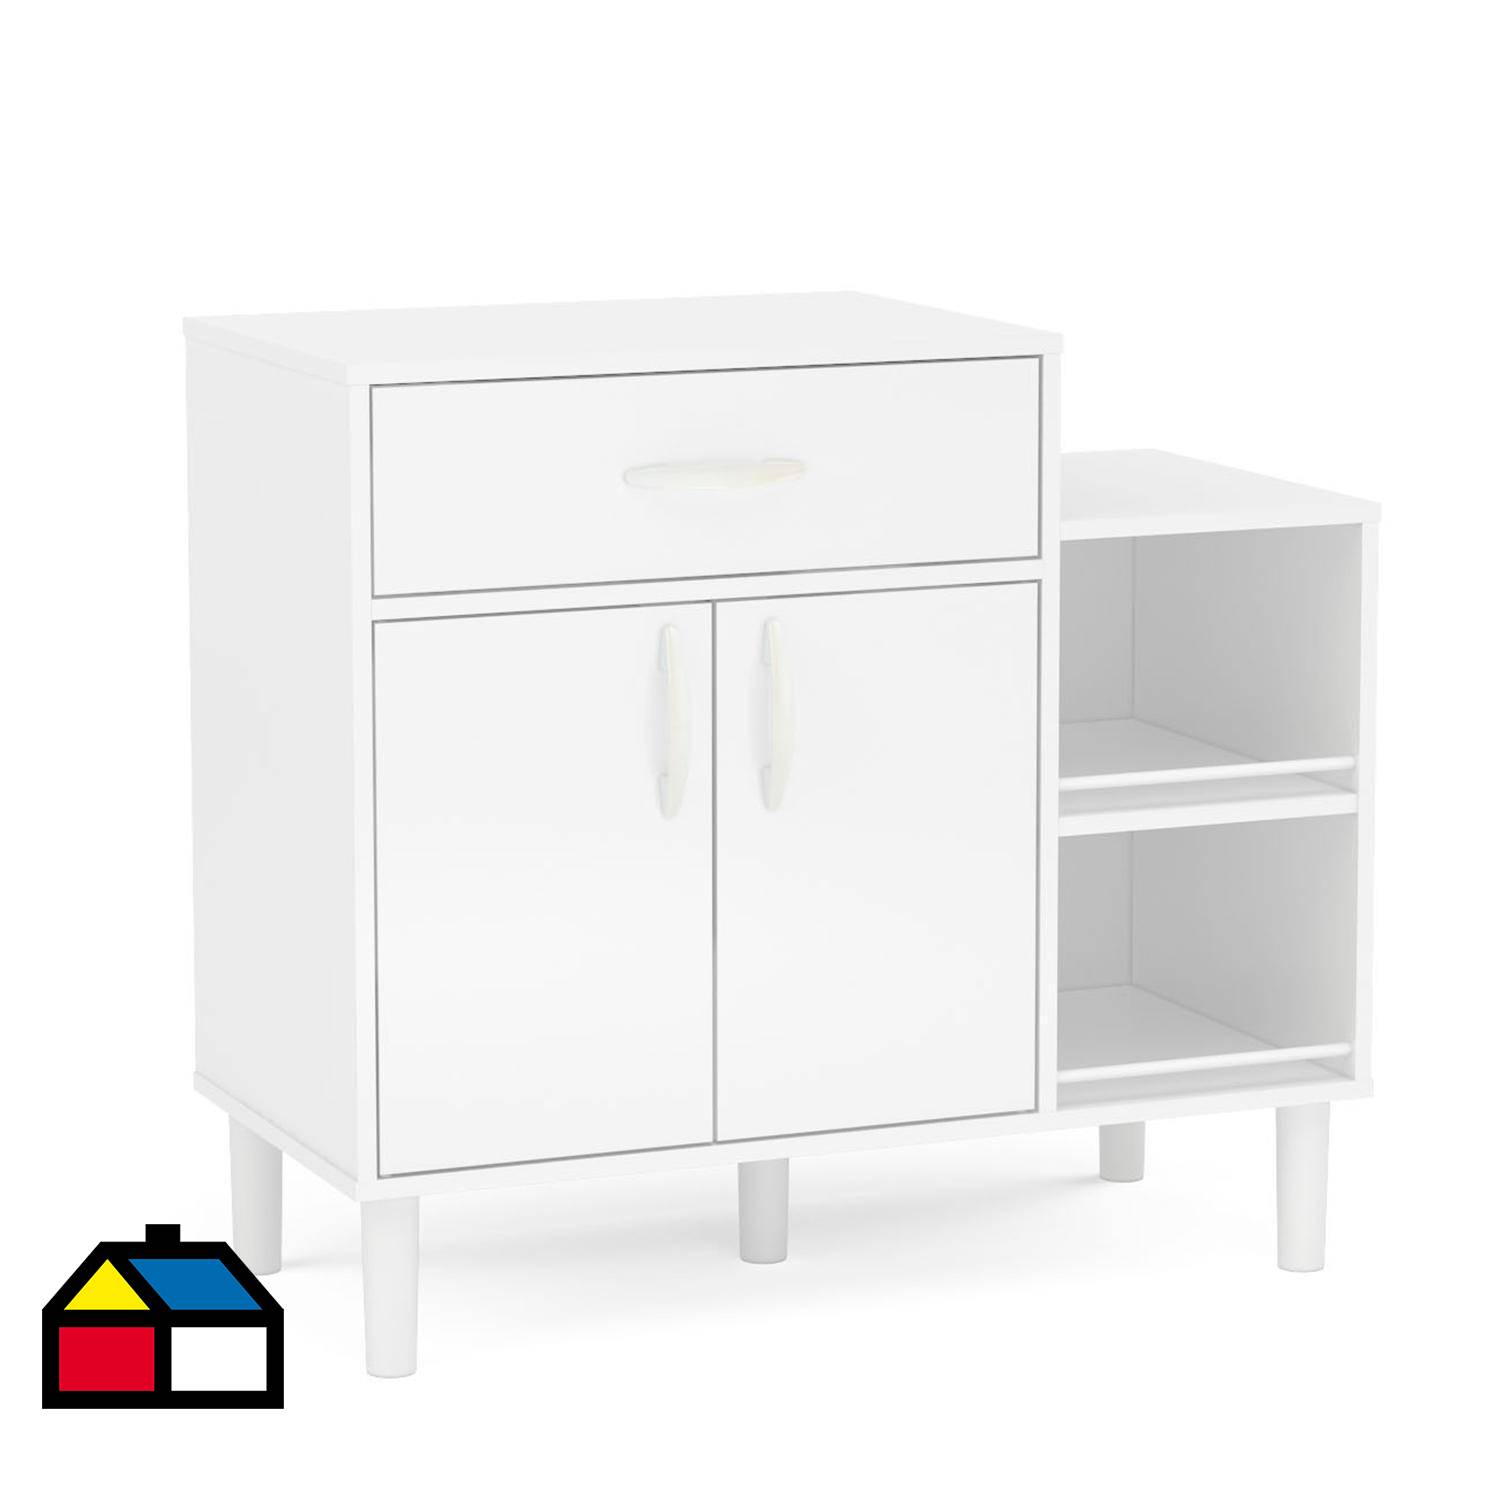 Mueble microondas 62 cm Blanco - Sodimac.com